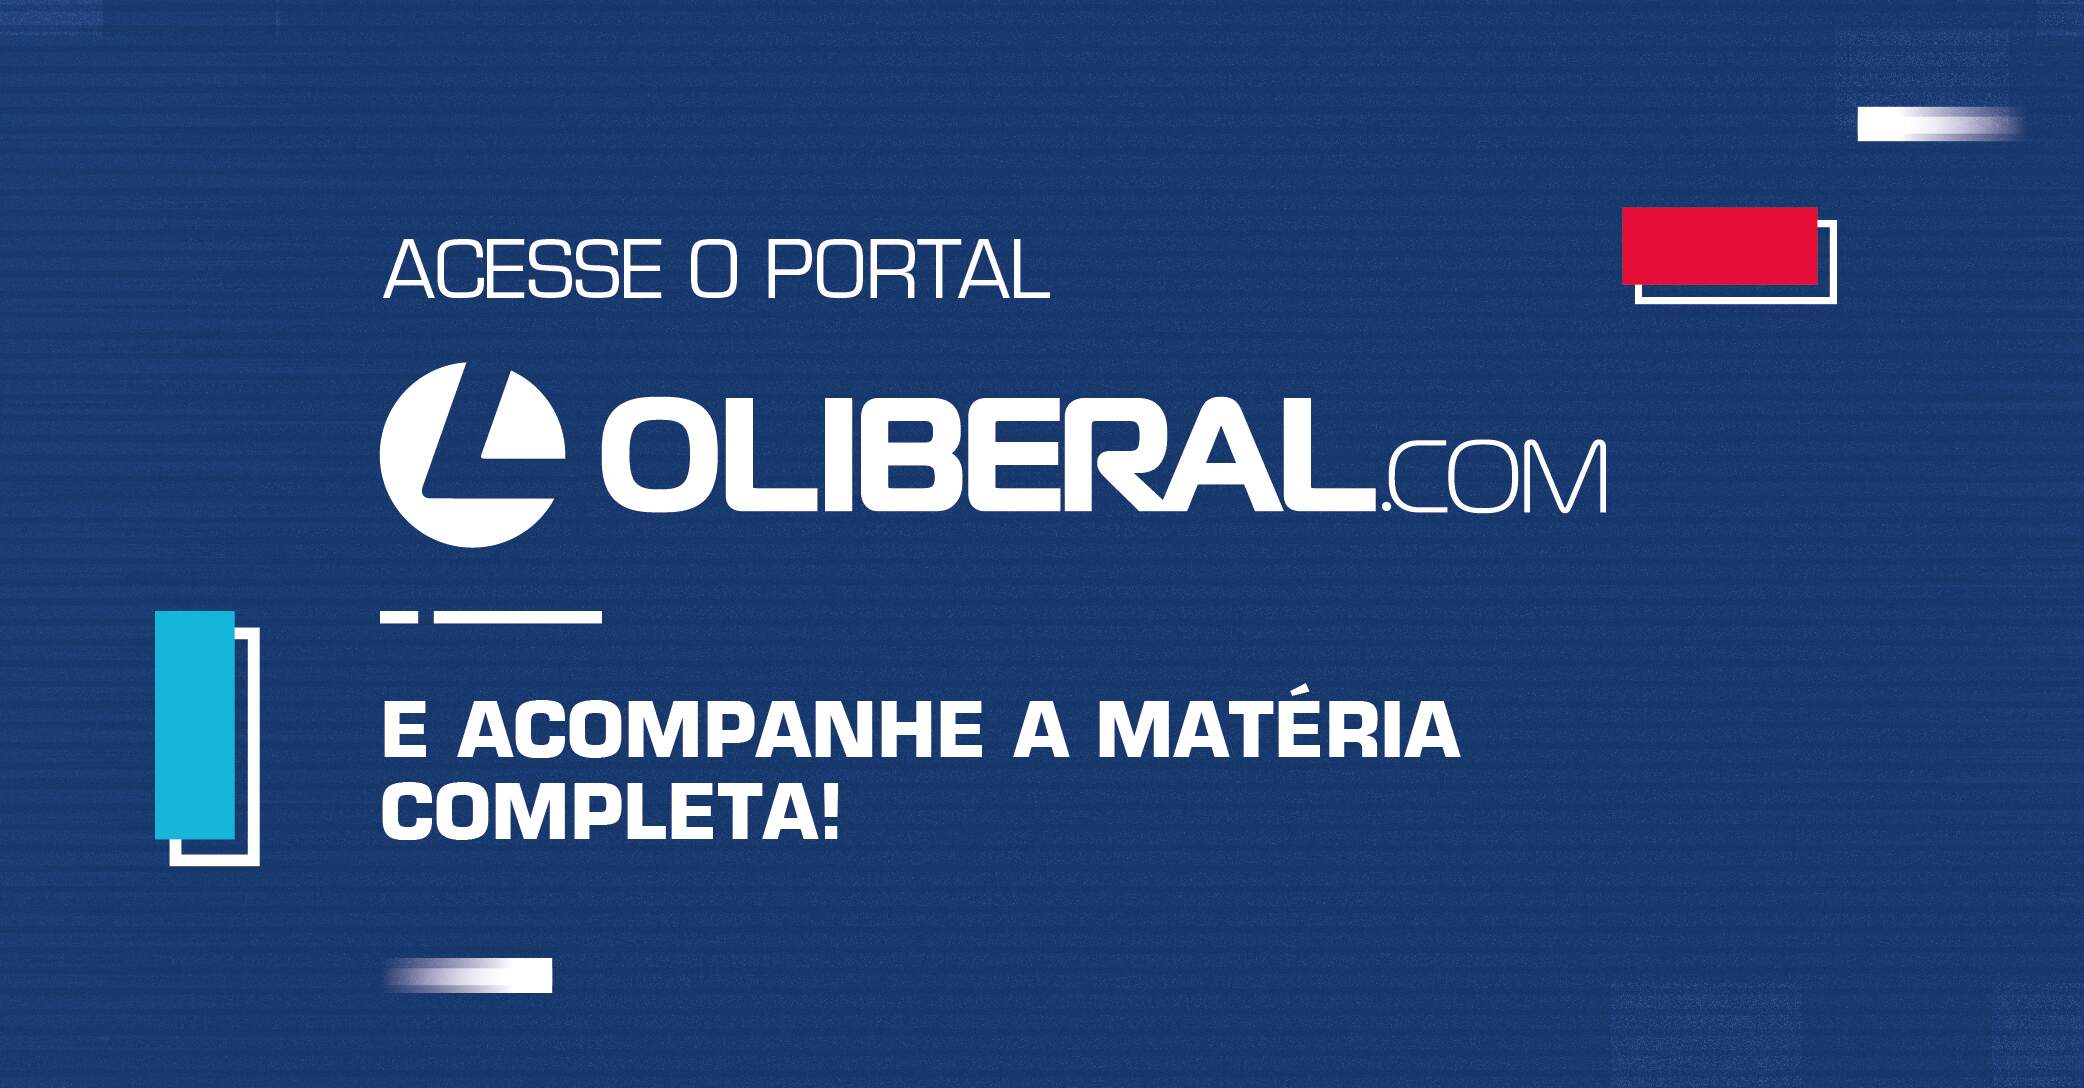 (c) Oliberal.com